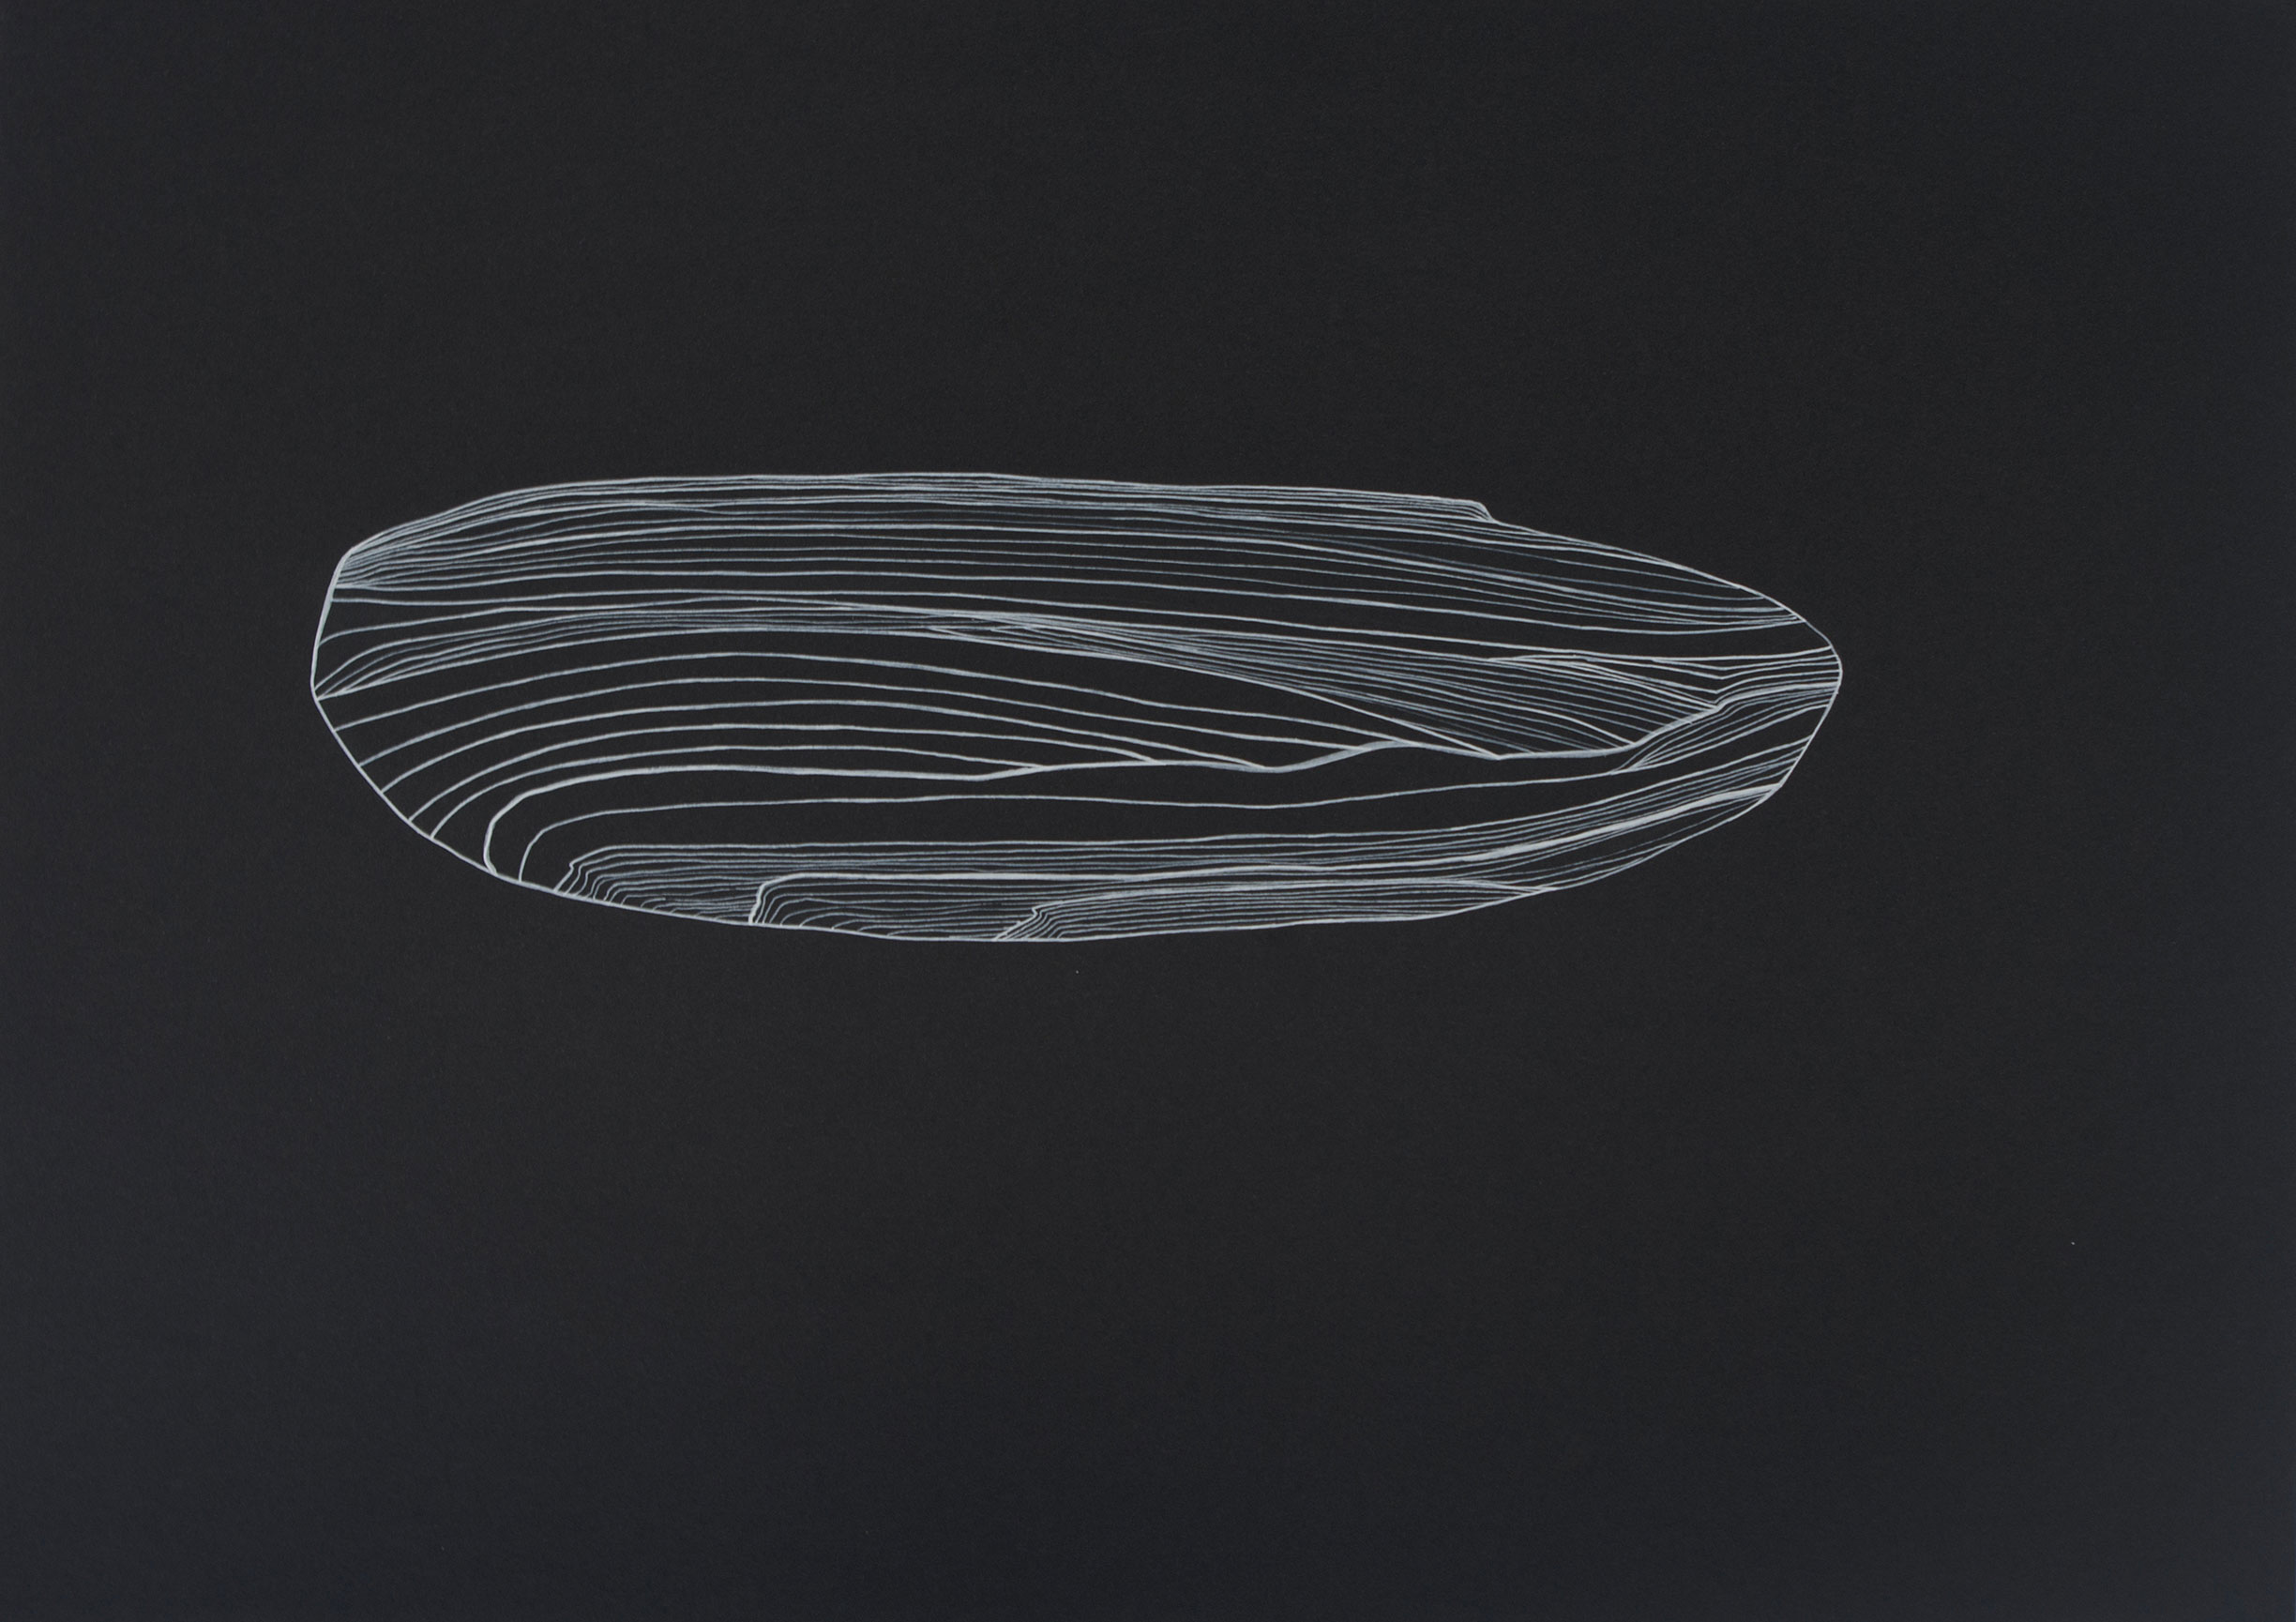 Rita Alaoui - OBJET TROUVÉ - 2014 N1 N3 N4 N7 N8 N13 - Acrylique sur papier 65 x 70 cm